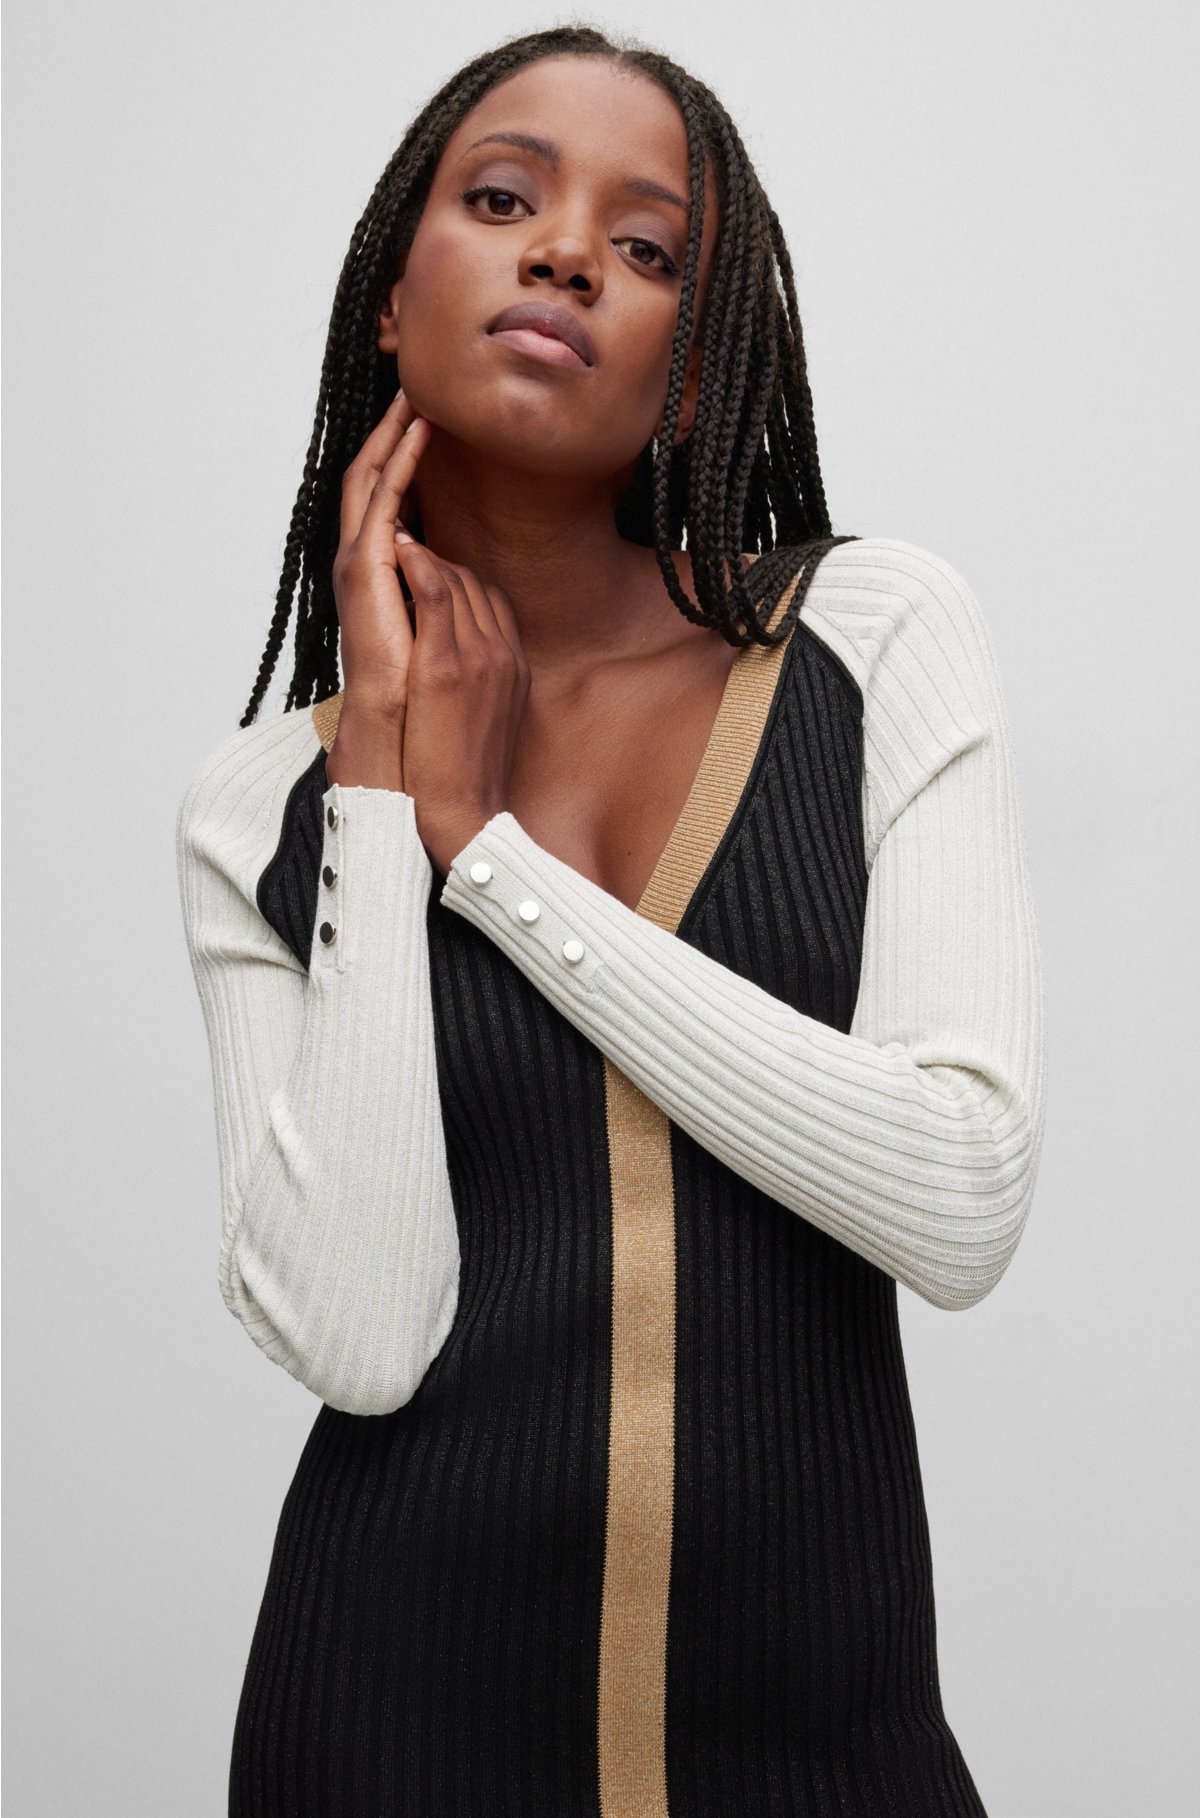 V-neck knitted dress in metallised fabric, Patterned